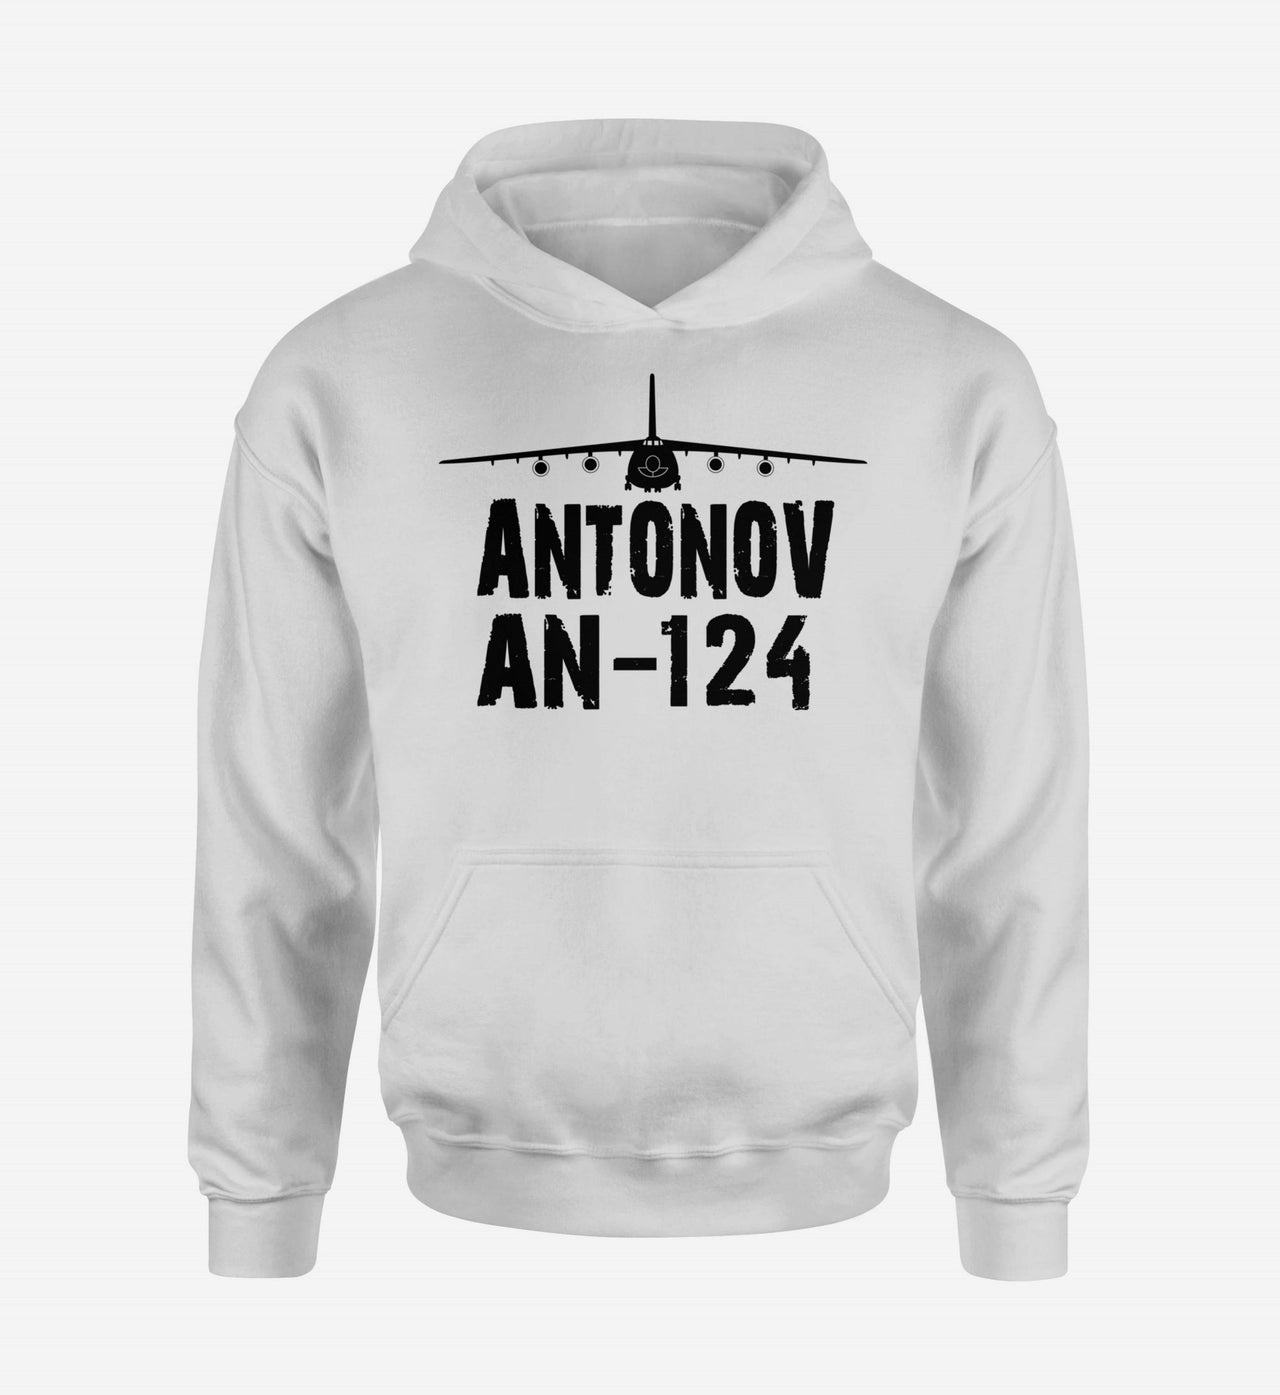 Antonov AN-124 & Plane Designed Hoodies